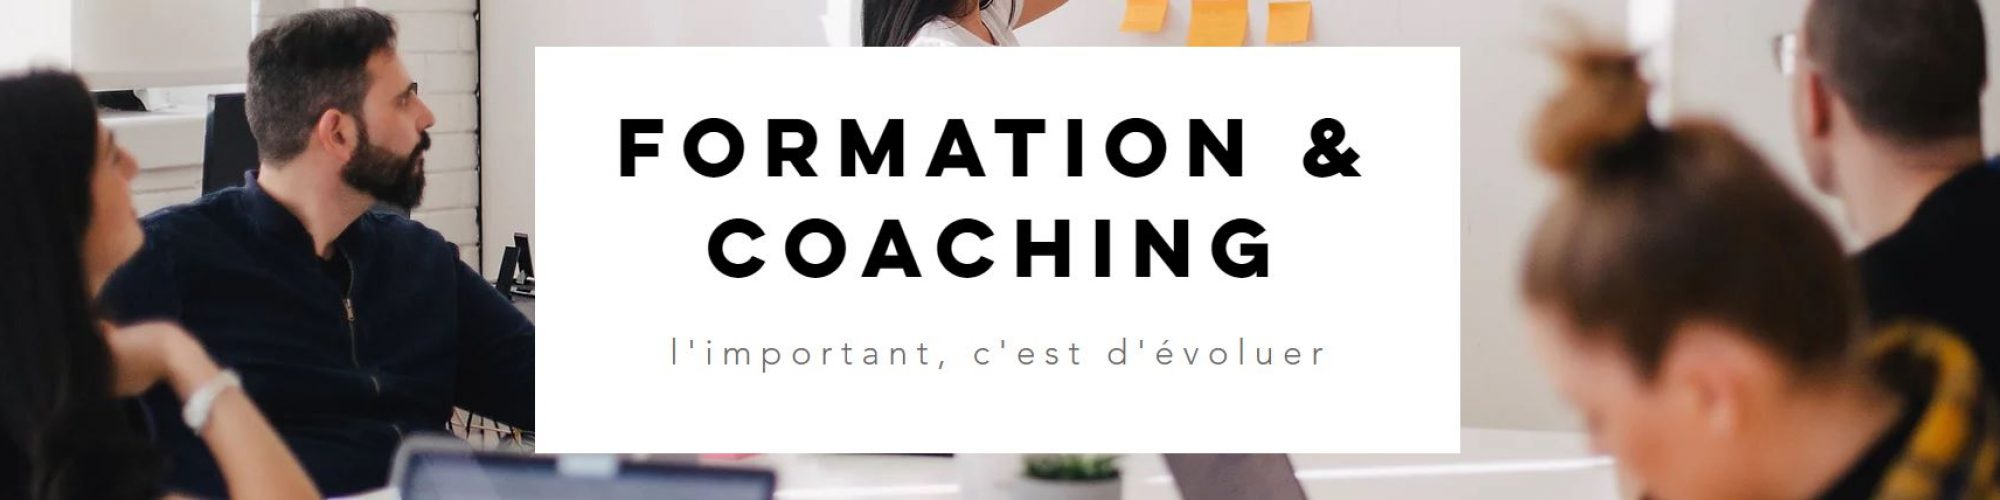 Formation & Coaching cecileboury.com 2